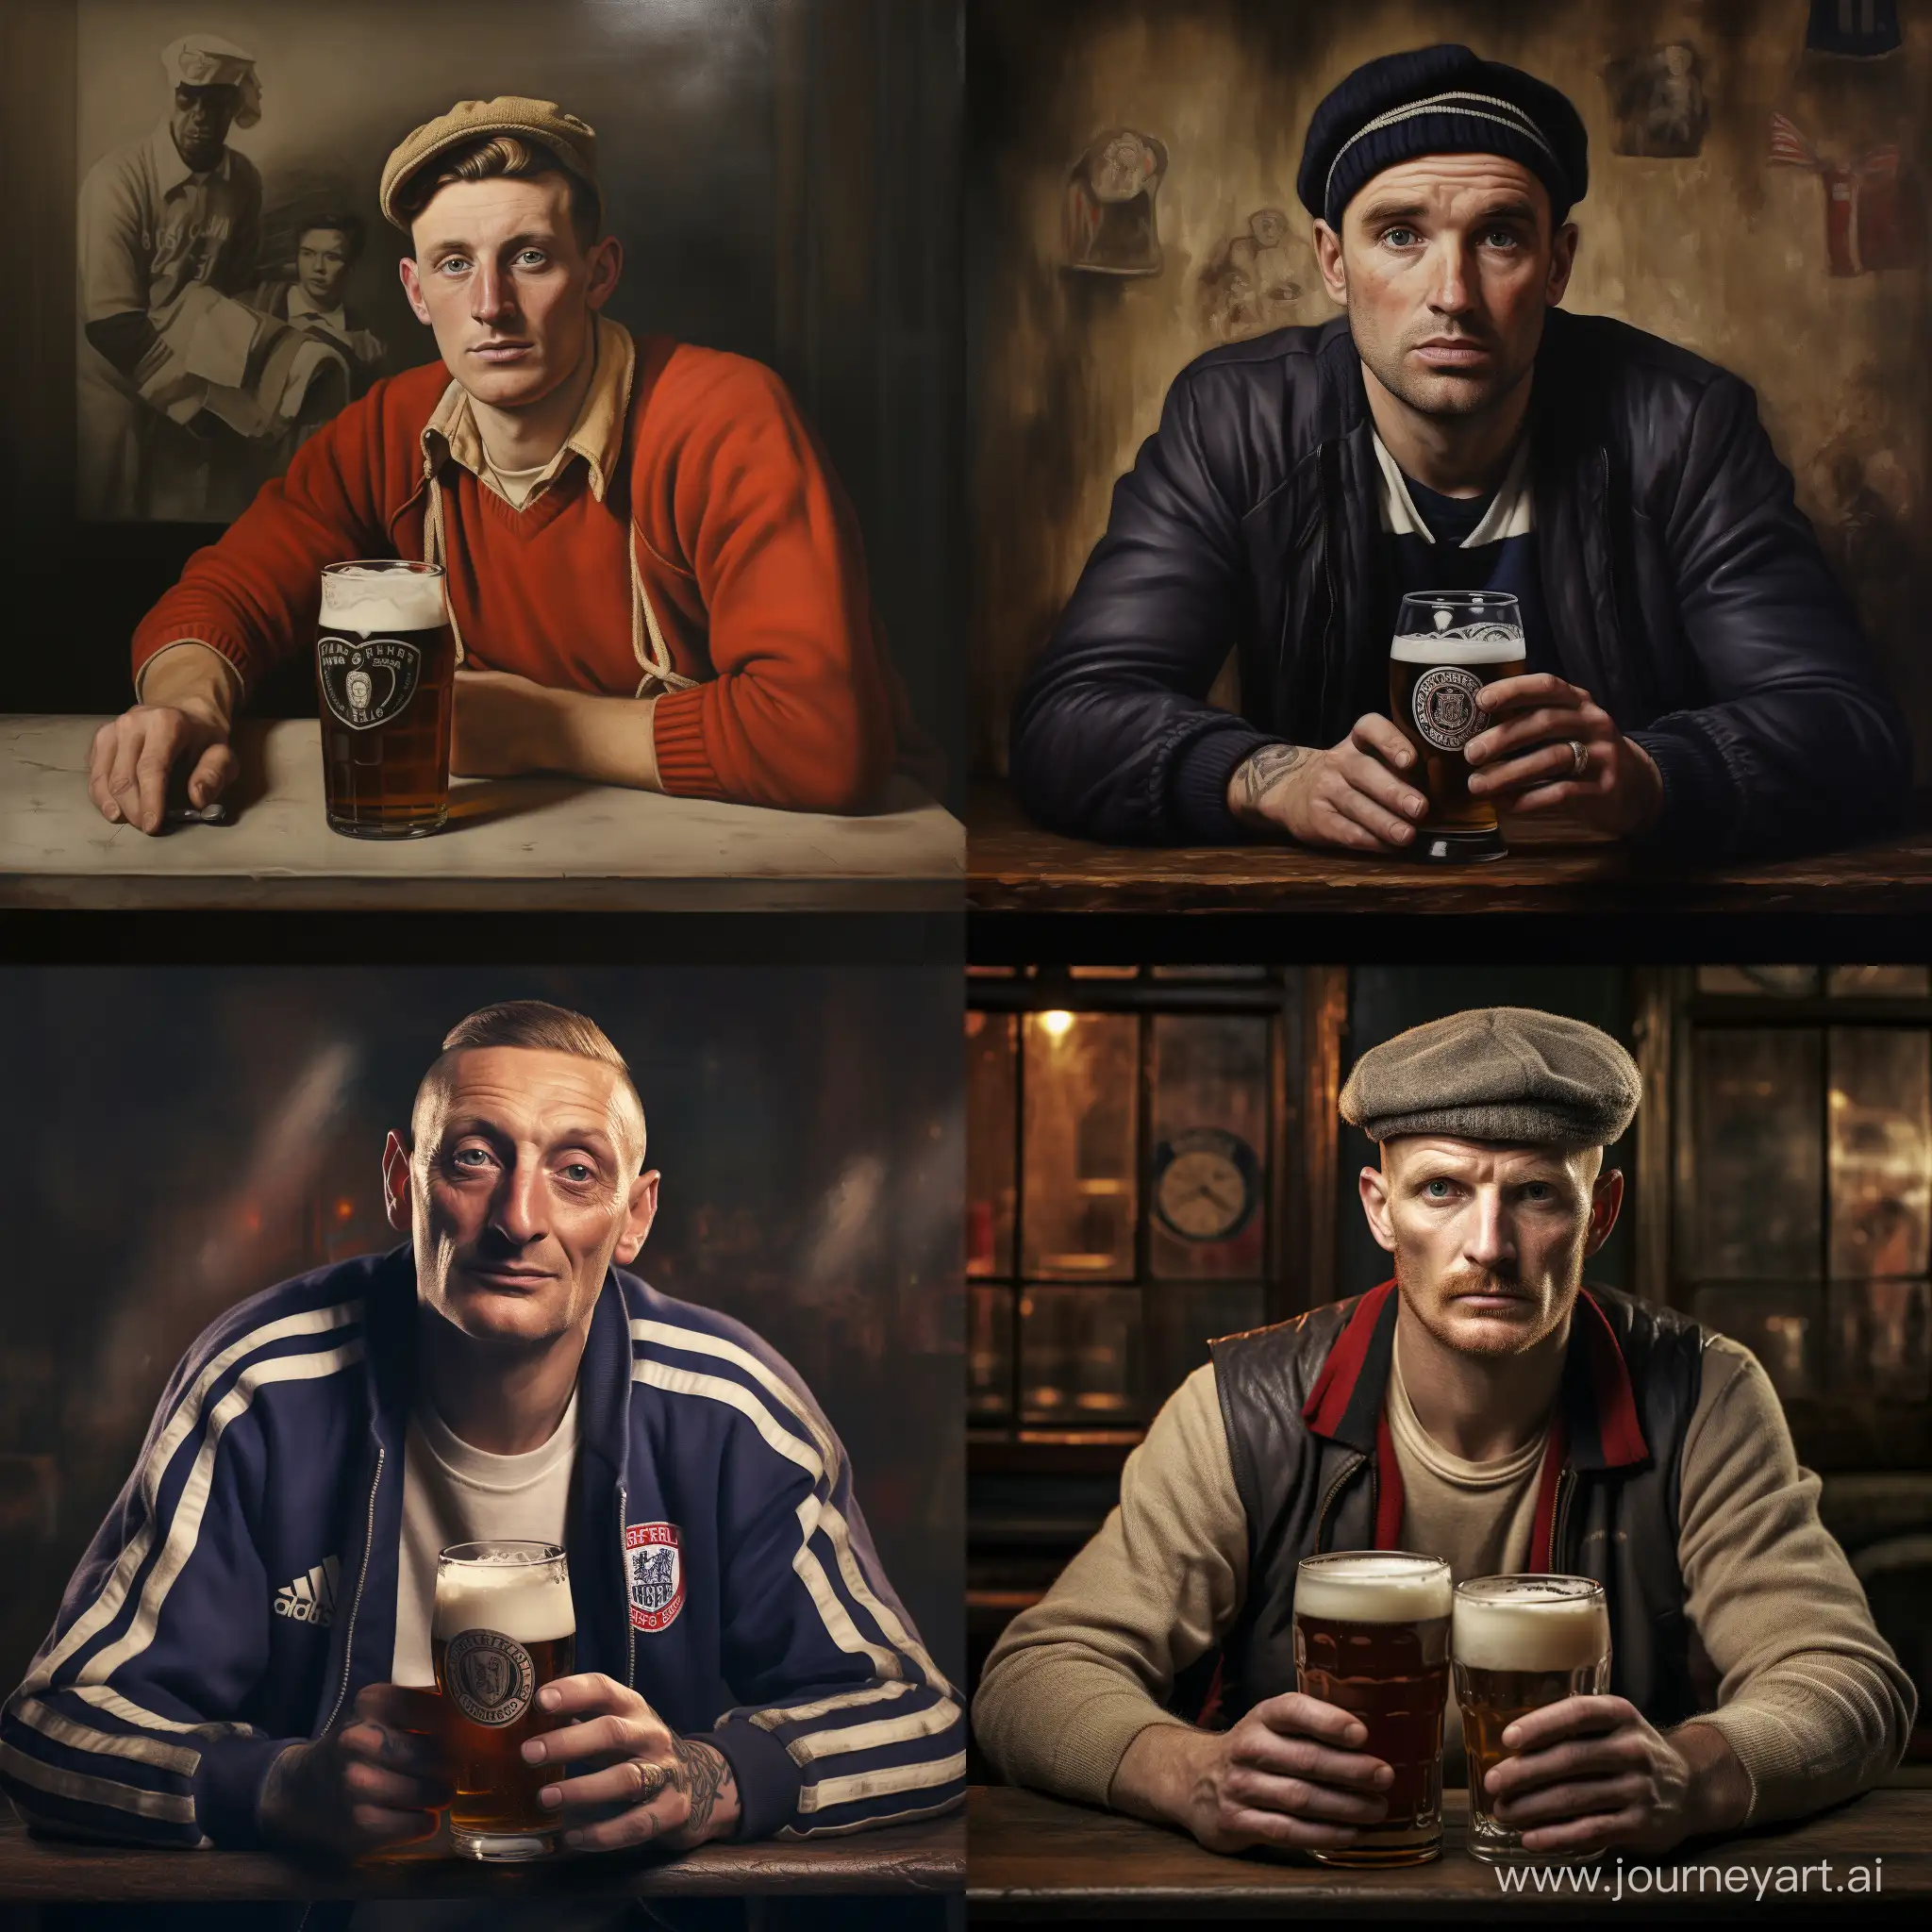 Fifties English man, football hooligan vibes, beer drinker, photo realistic, potrait